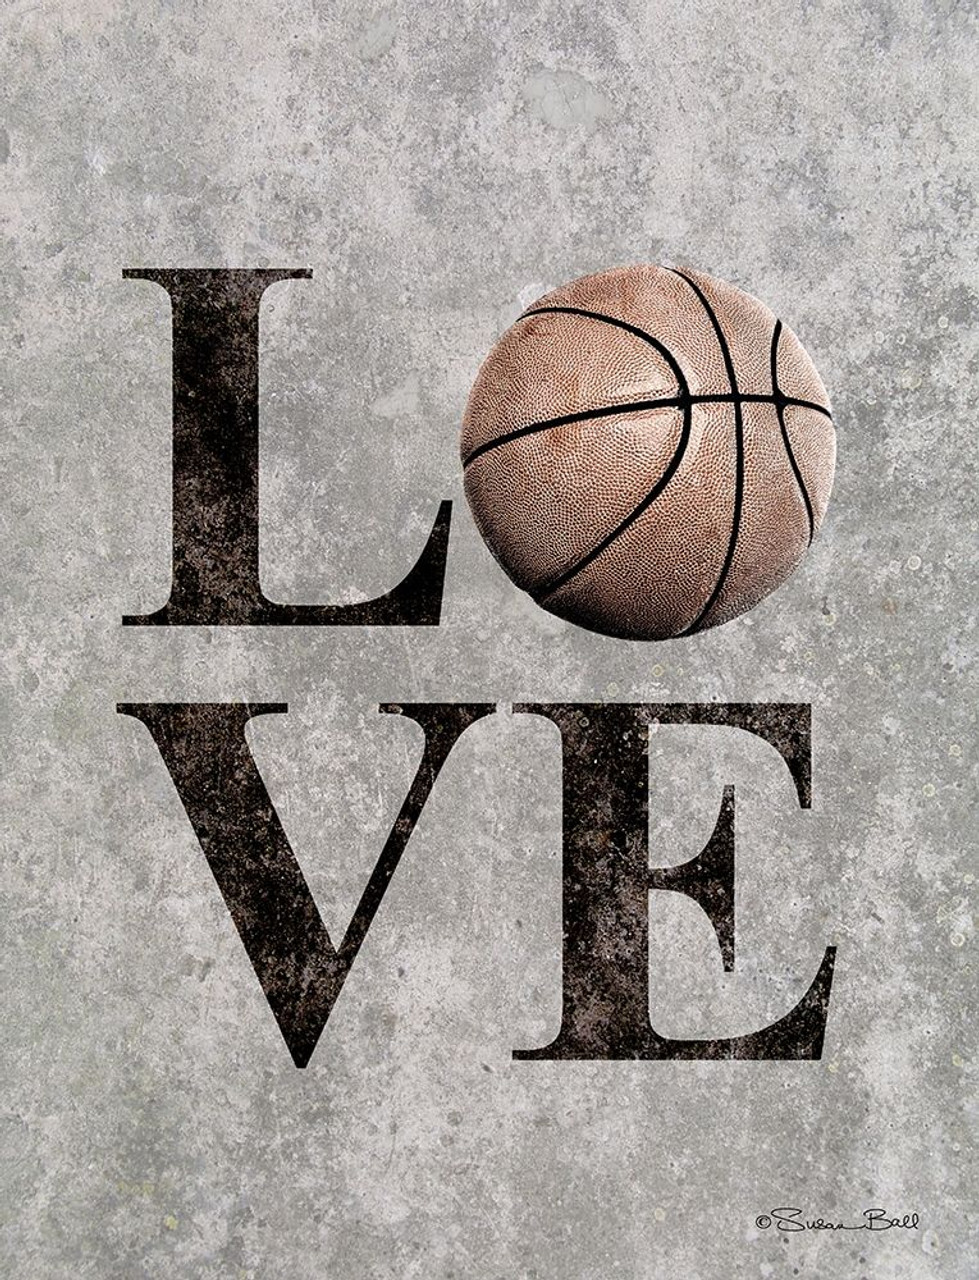 LOVE Basketball Poster Print by Susan Ball - Item # VARPDXSB671 - Posterazzi